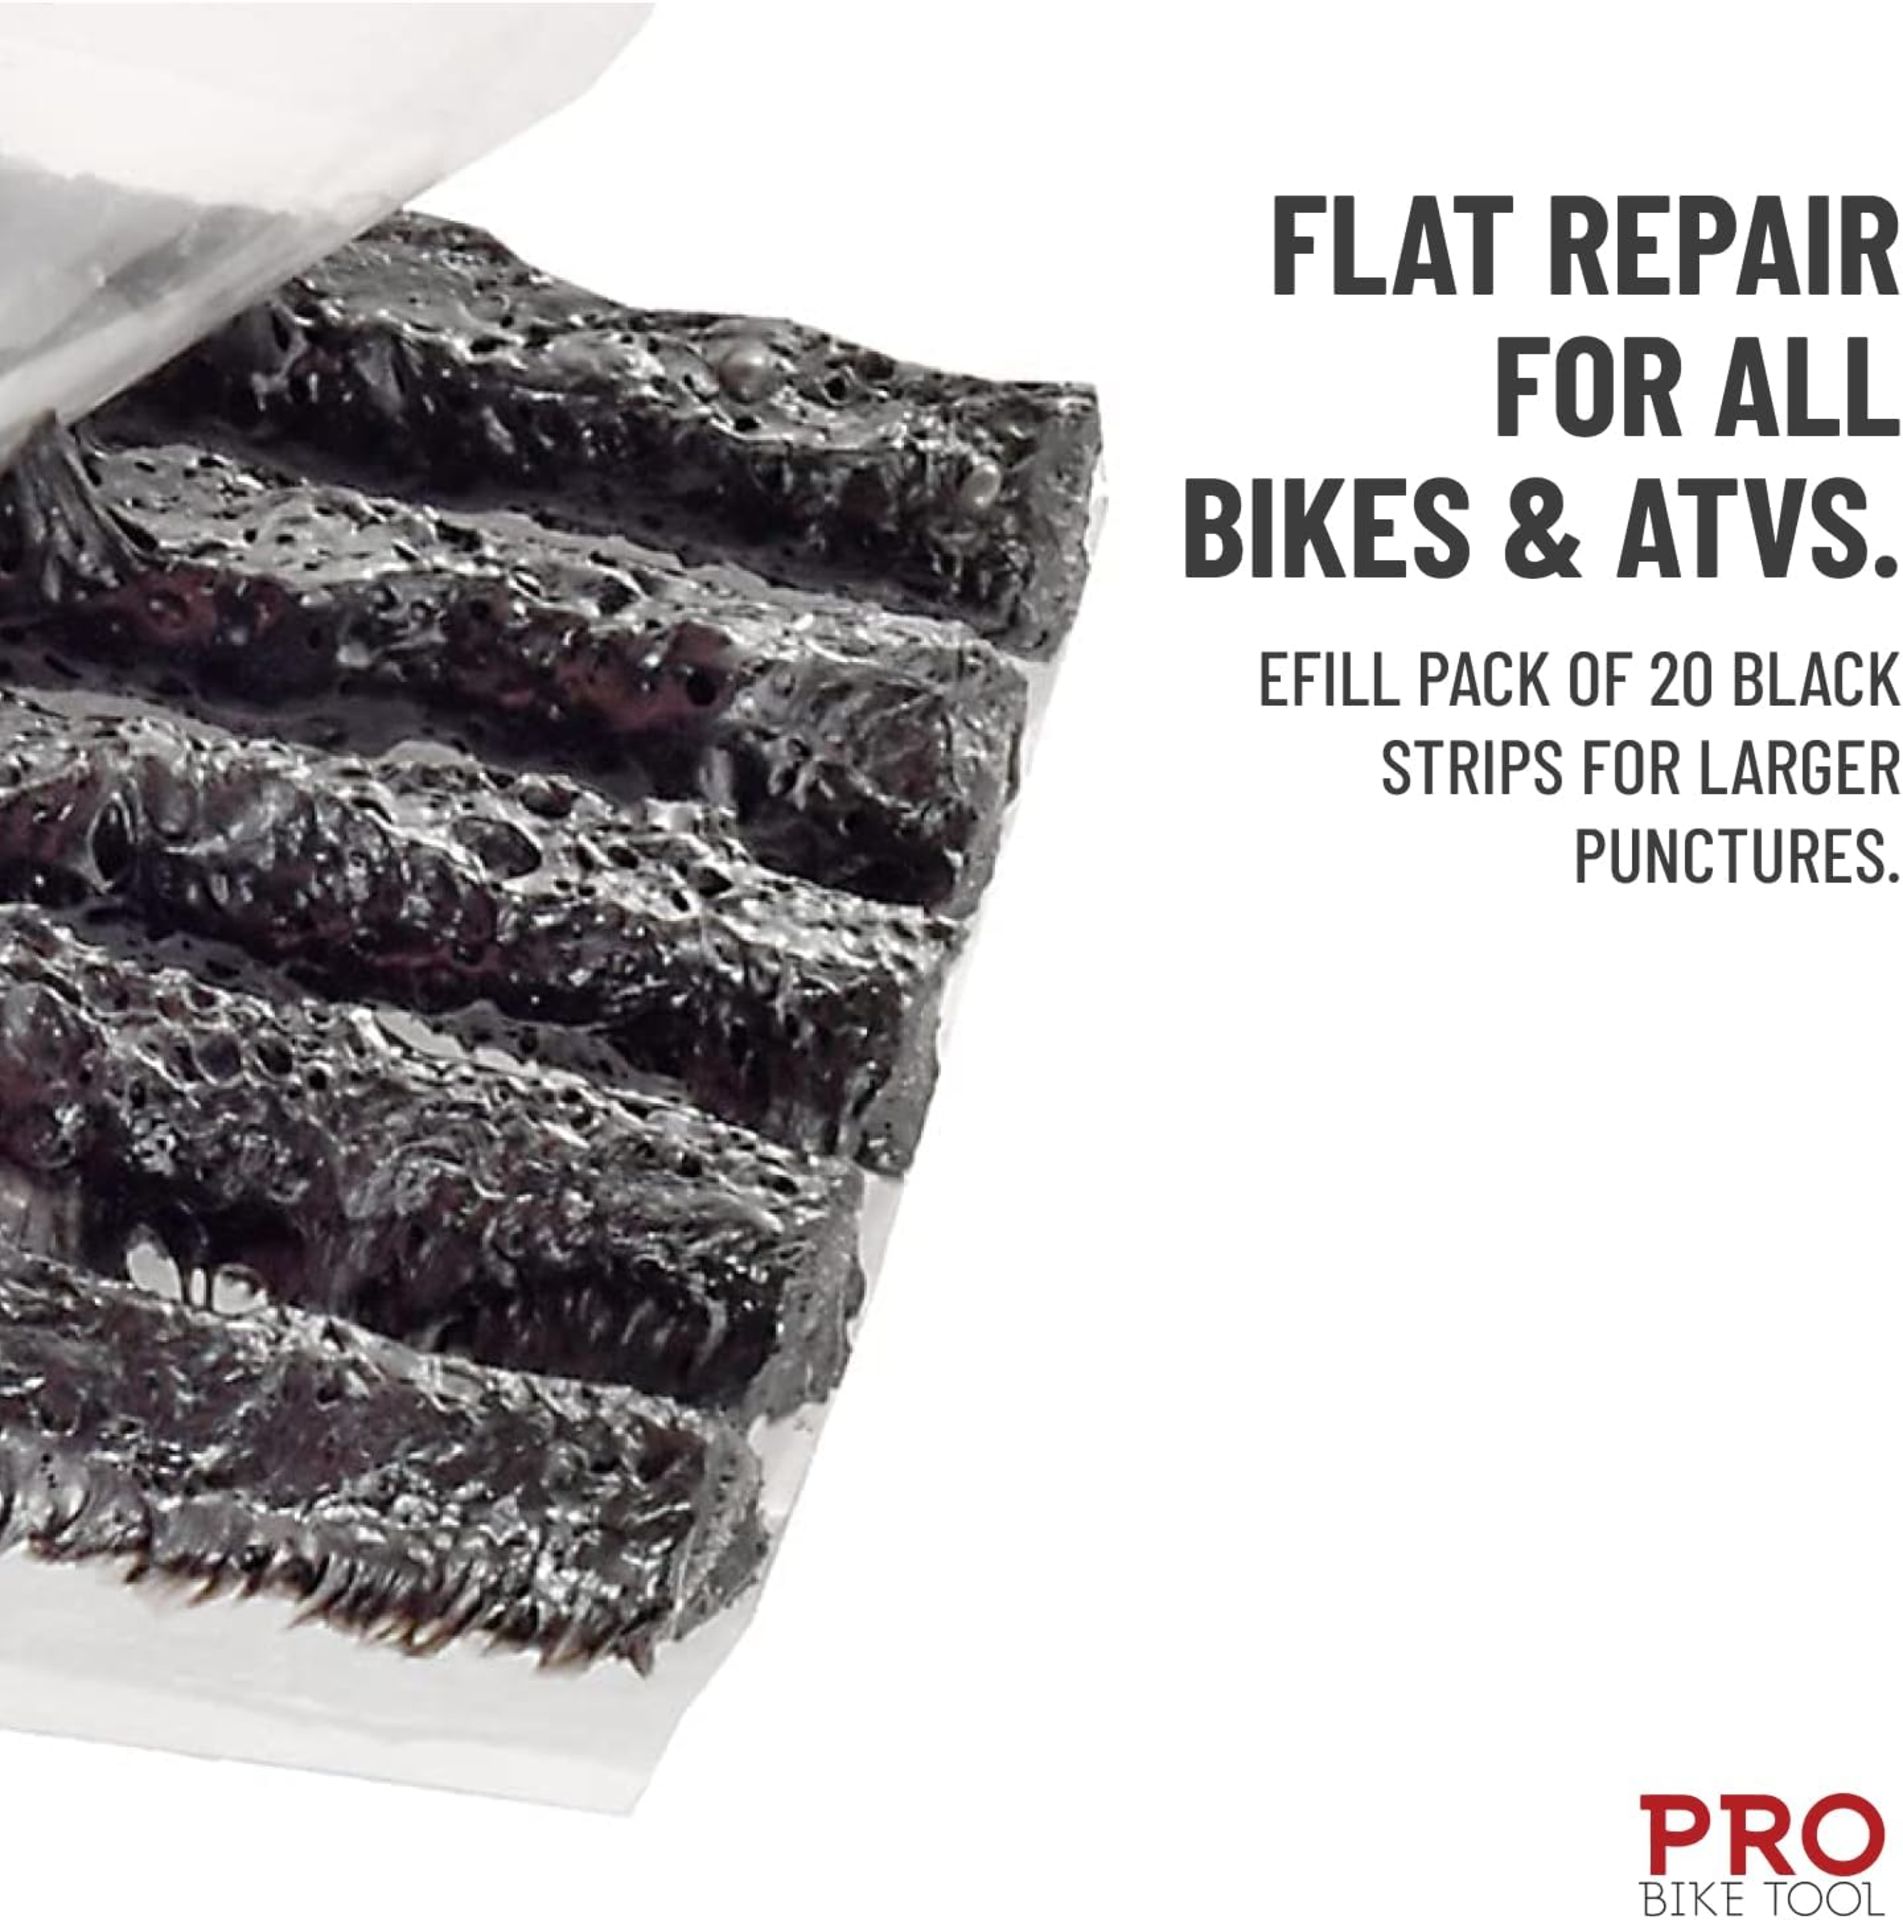 10 x Pro Bike Tool Pack of 20 Tubeless Bike Tyre Repair Kit Black Strips 3.5mm - (NEW) - RRP £79+! - Image 5 of 7